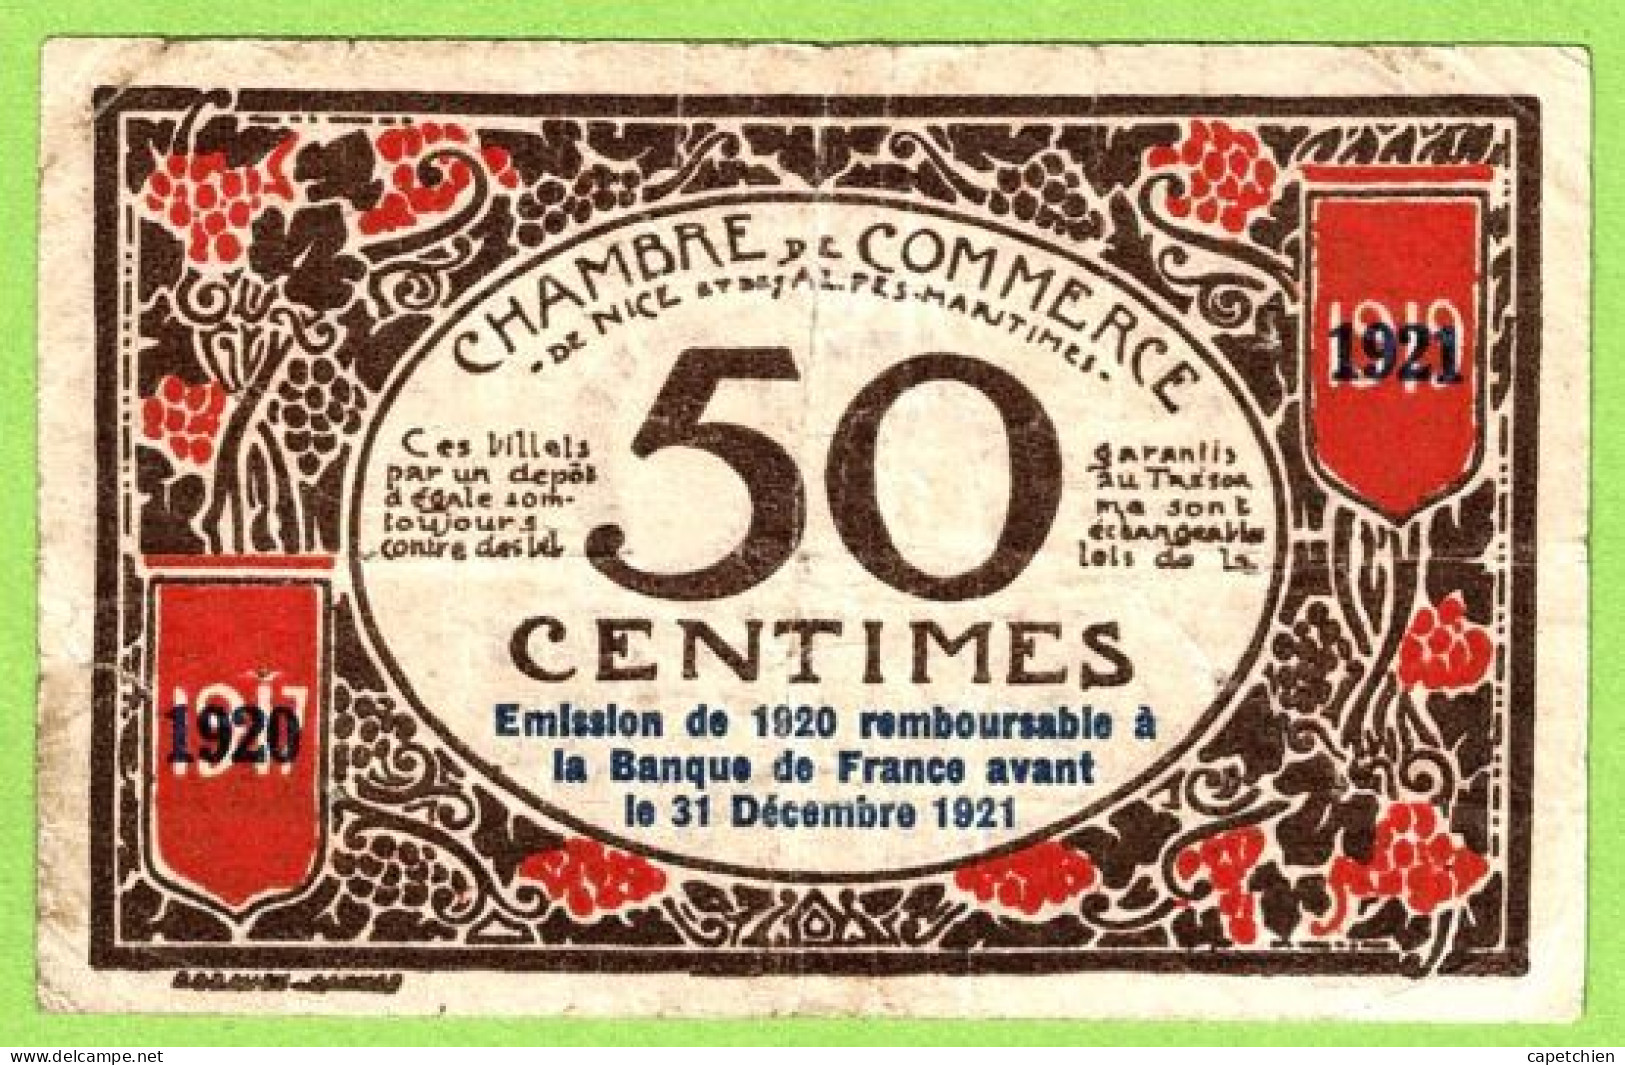 FRANCE / CHAMBRE De COMMERCE / NICE - ALPES MARITIMES / 50 CENTIMES / 1917 - 1921 SURCHARGE 1920 - 1921 / N° 17466 - Camera Di Commercio